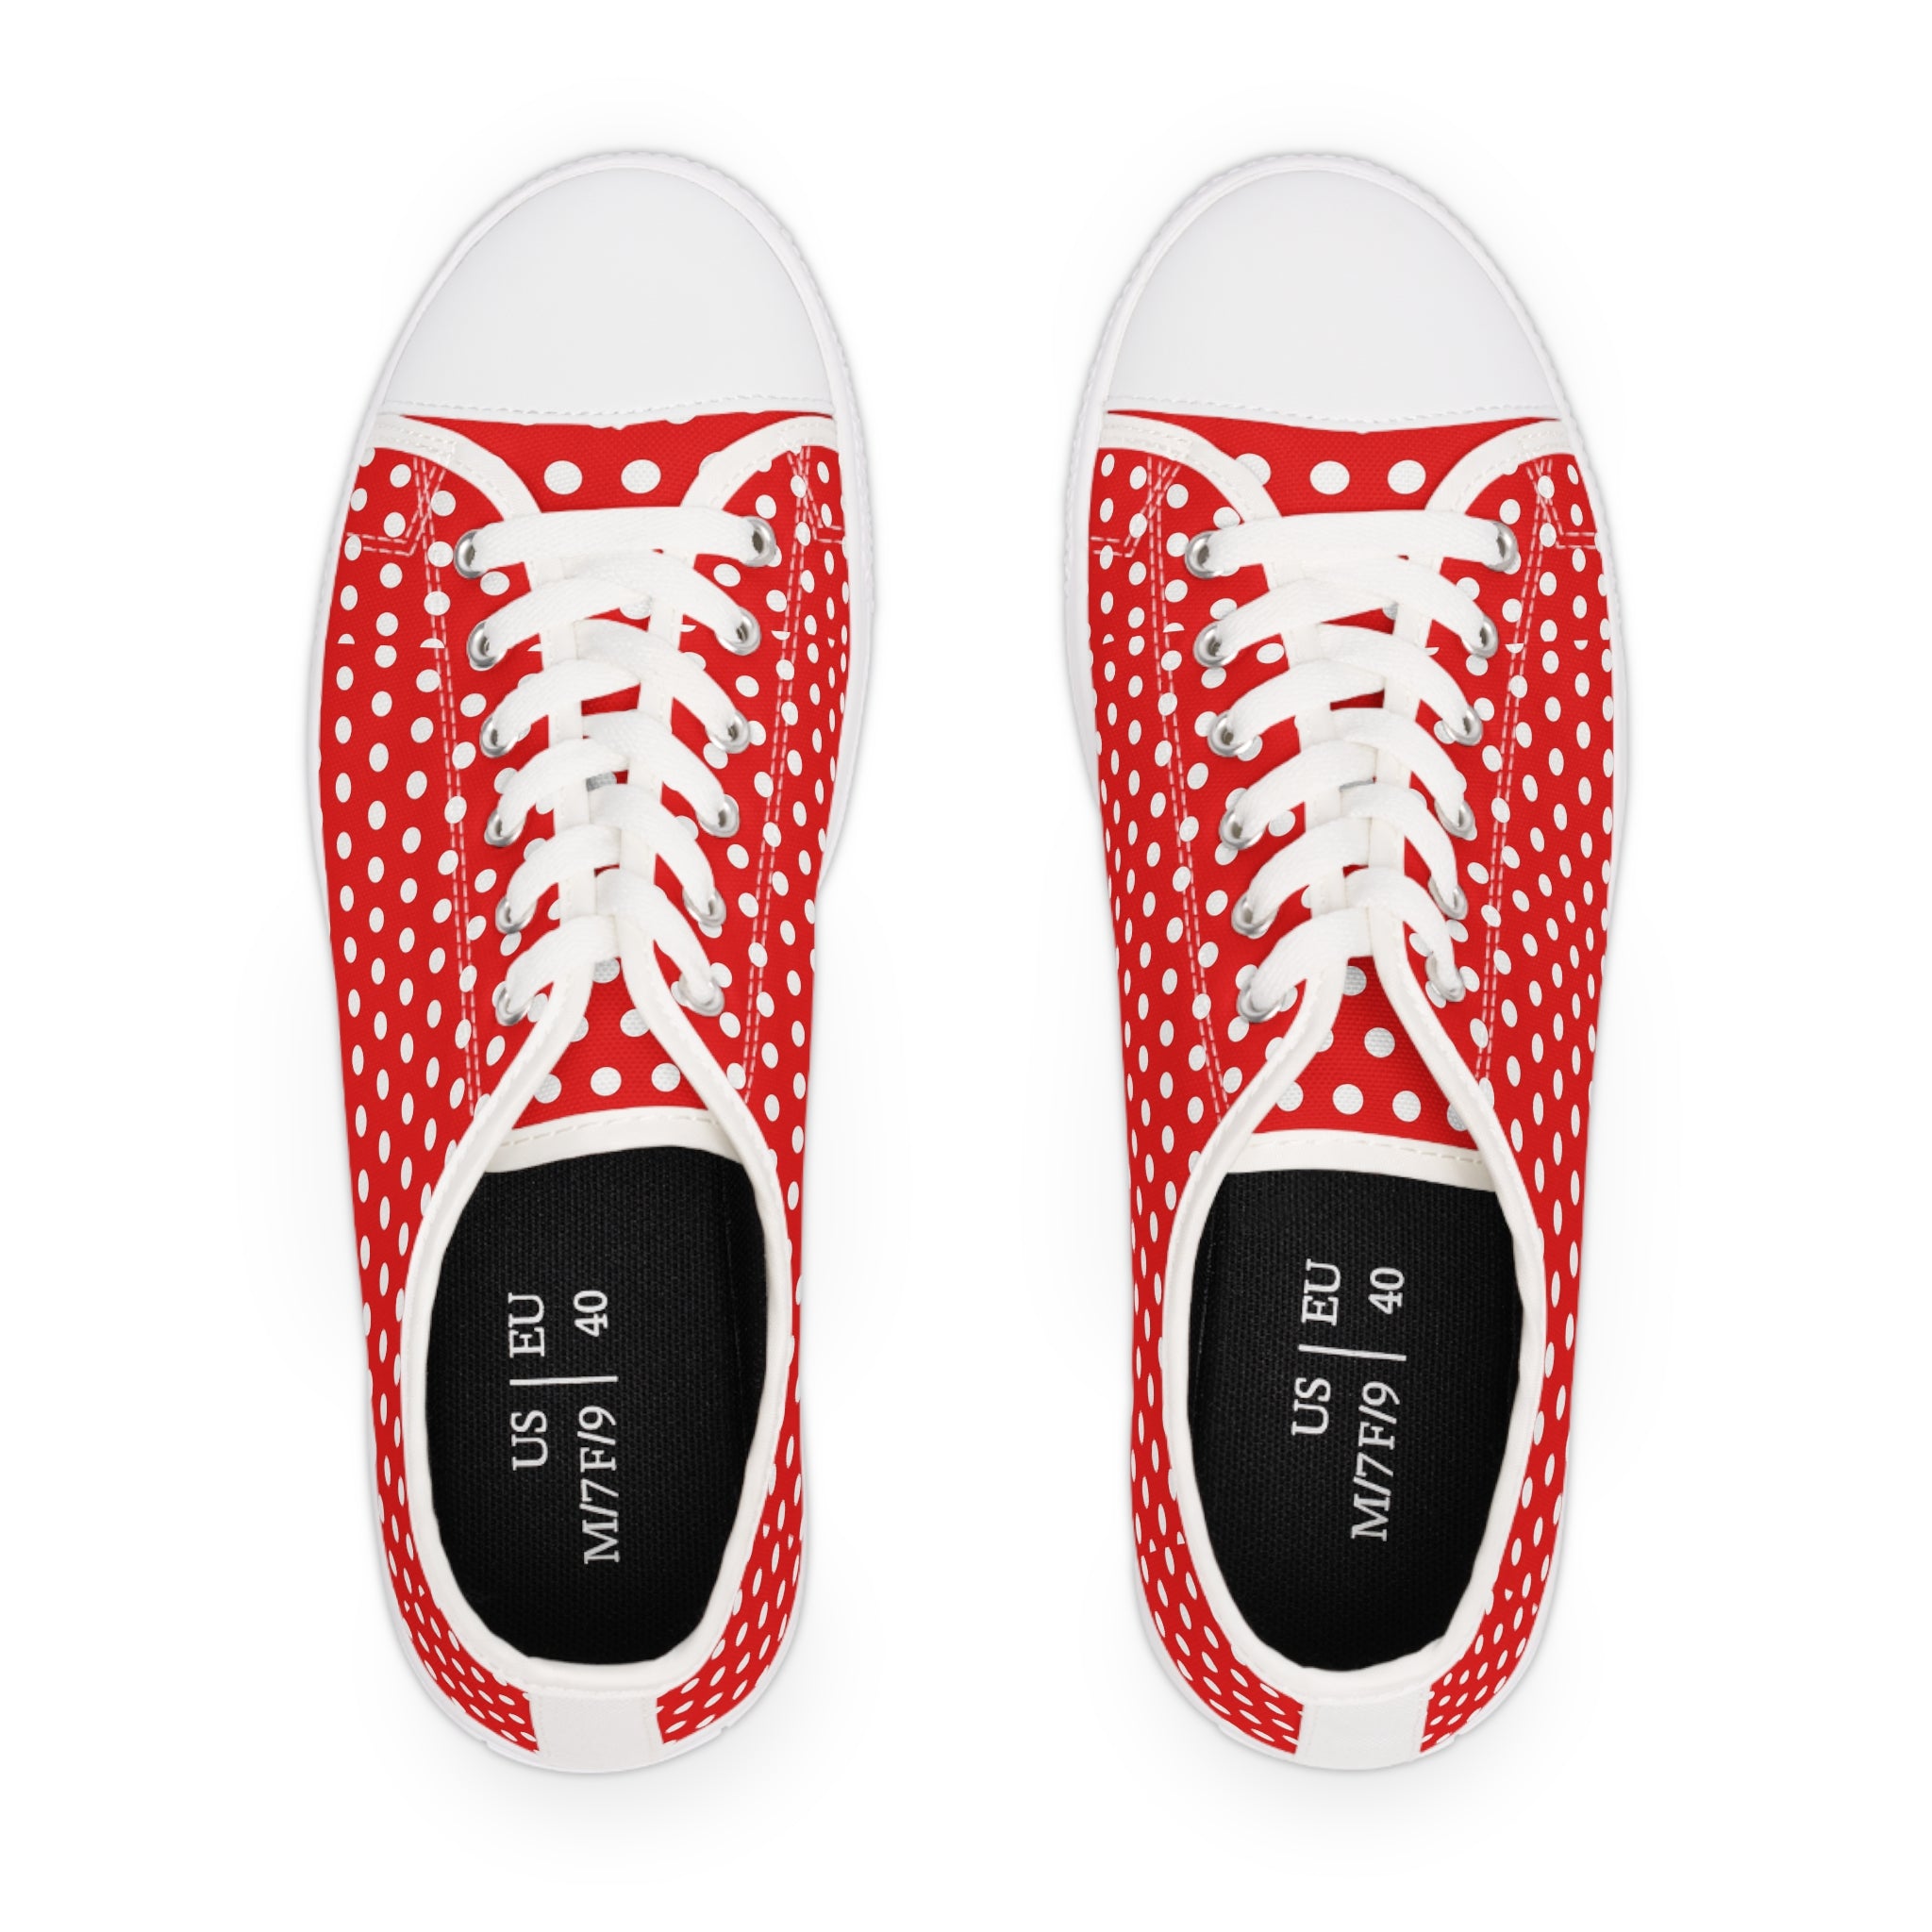 Red-White Dots Women's Low Top Sneakers - SportsGO